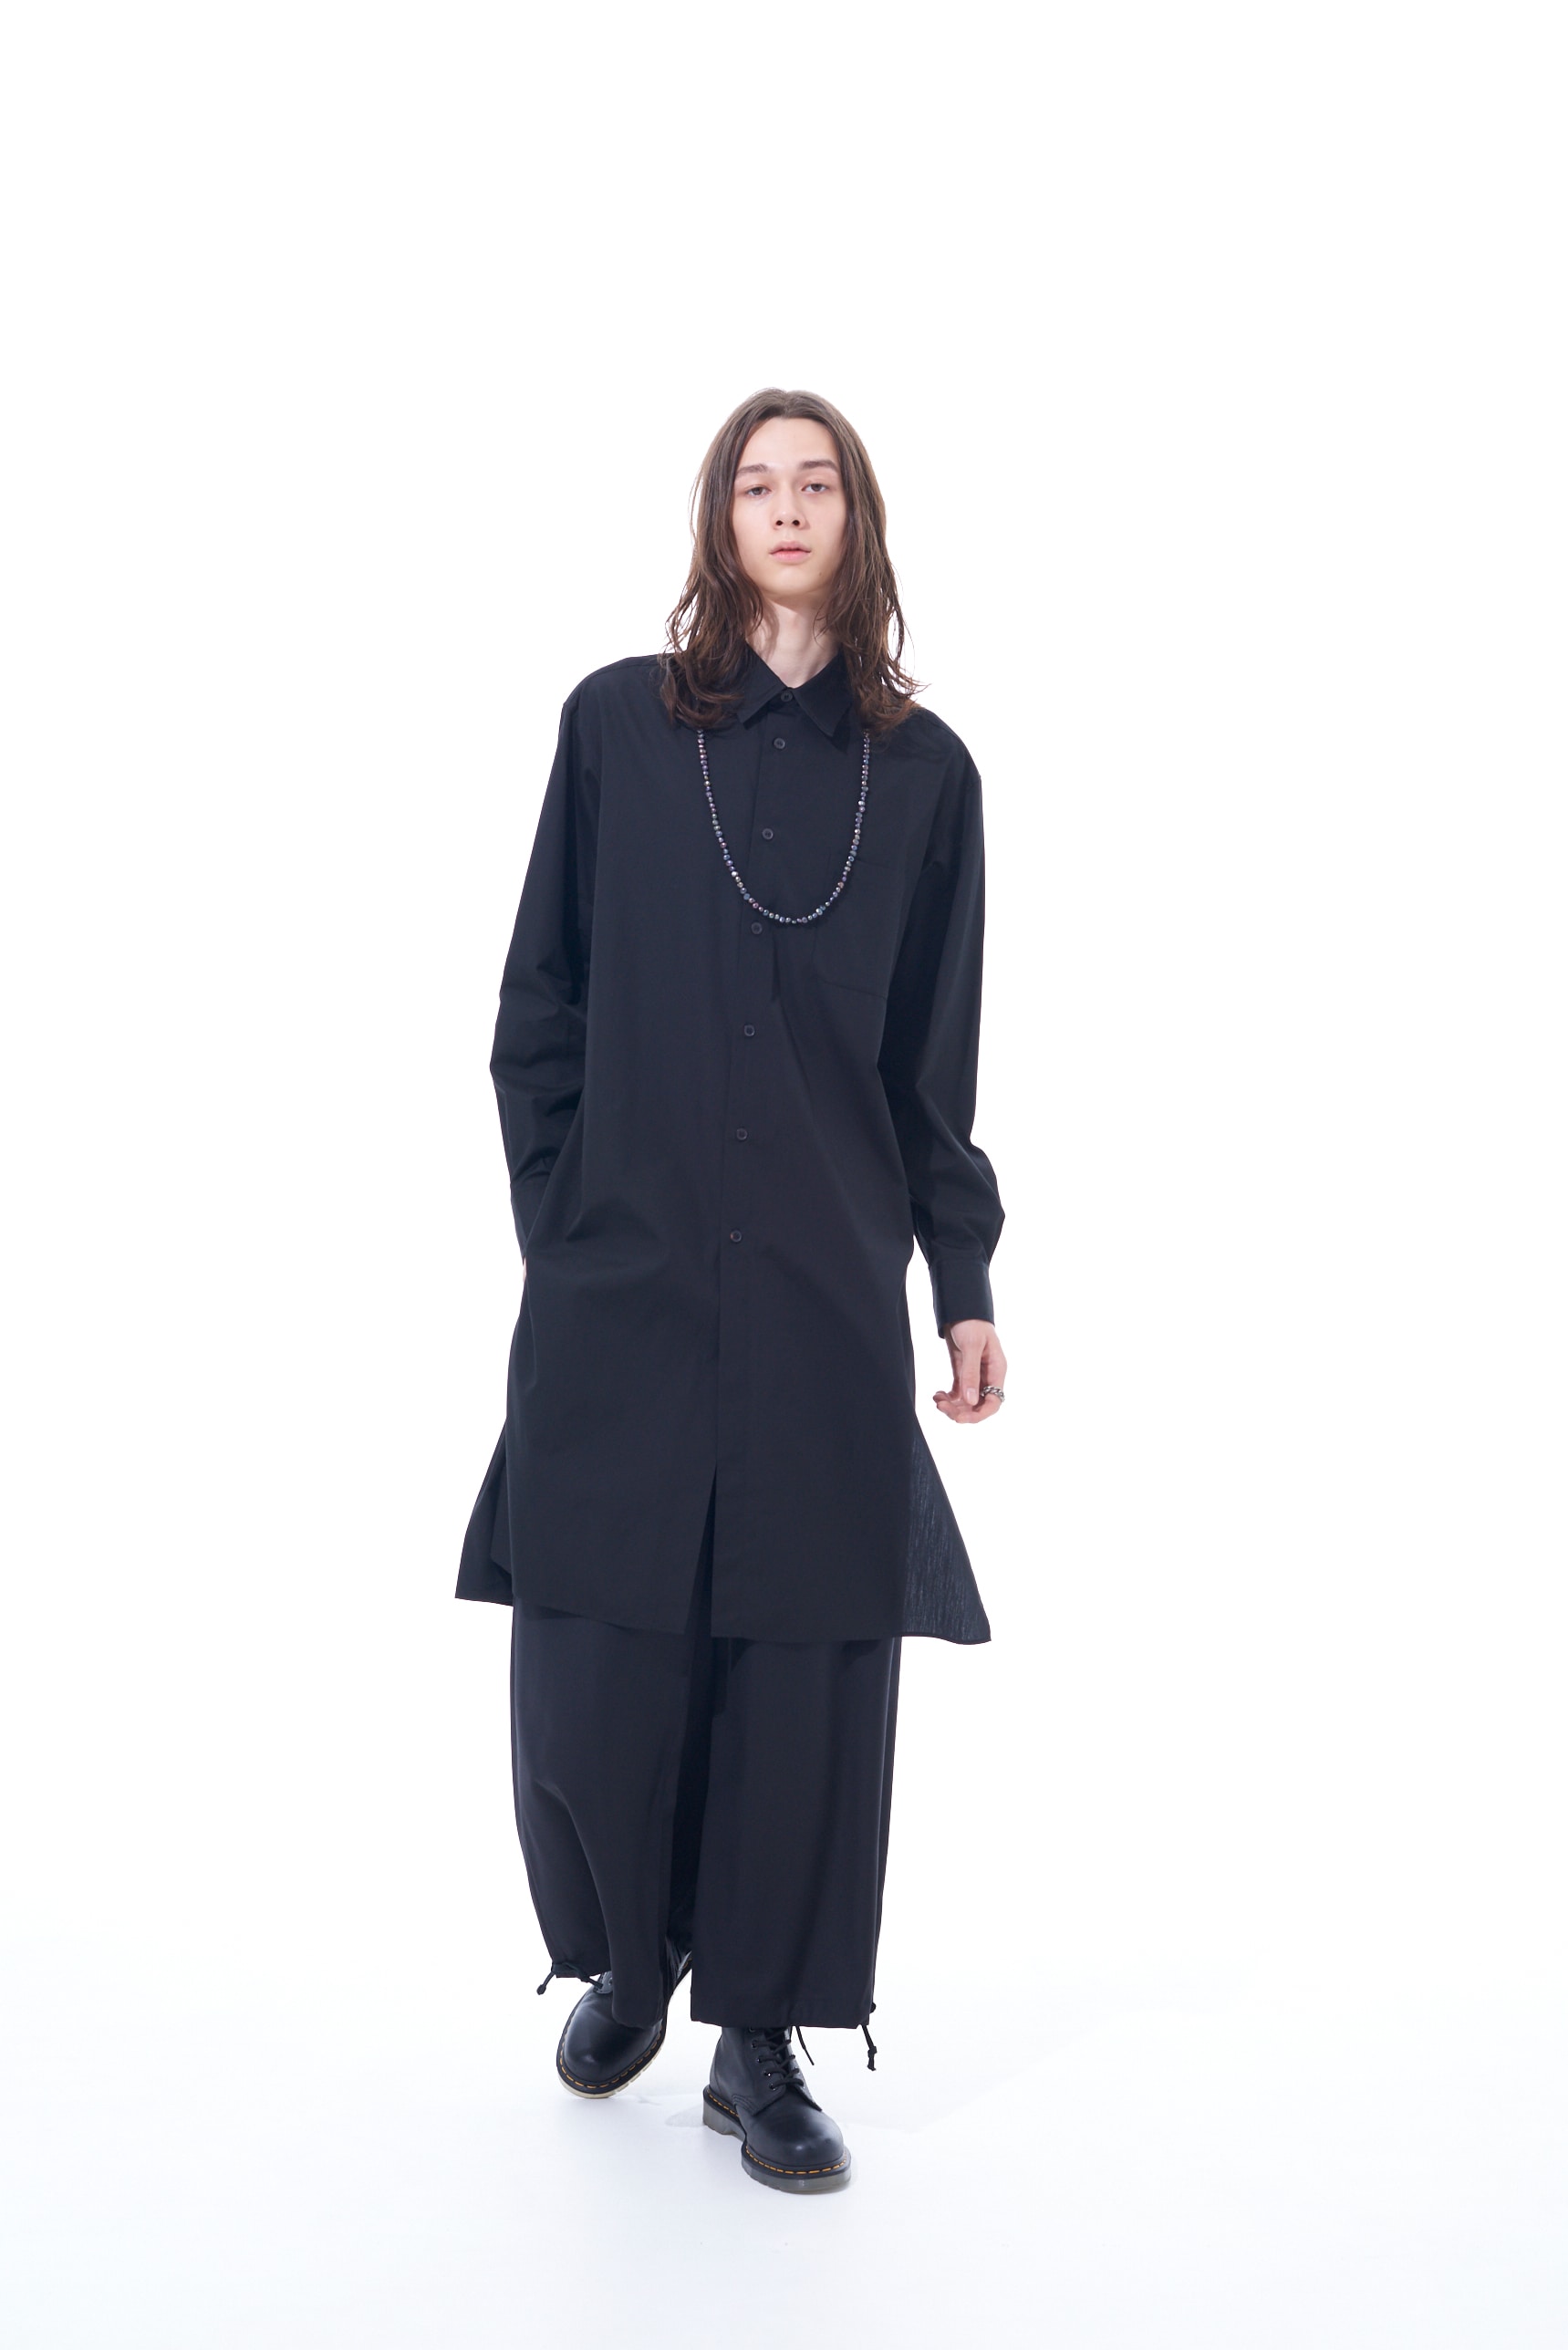 Yohji Yamamoto drop-shoulder classic-collar shirt - Black